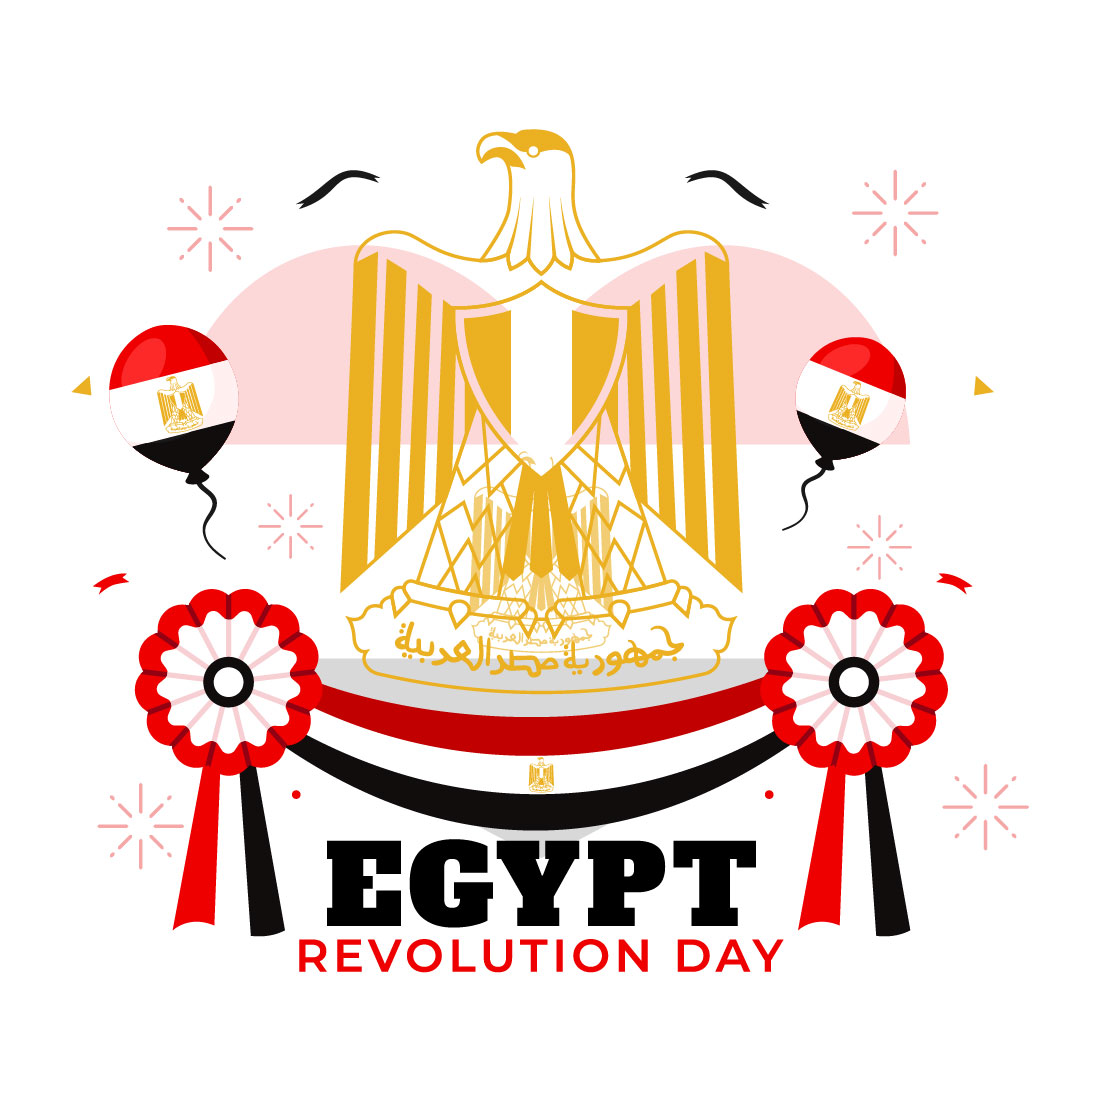 12 Egypt Revolution Day Illustration preview image.